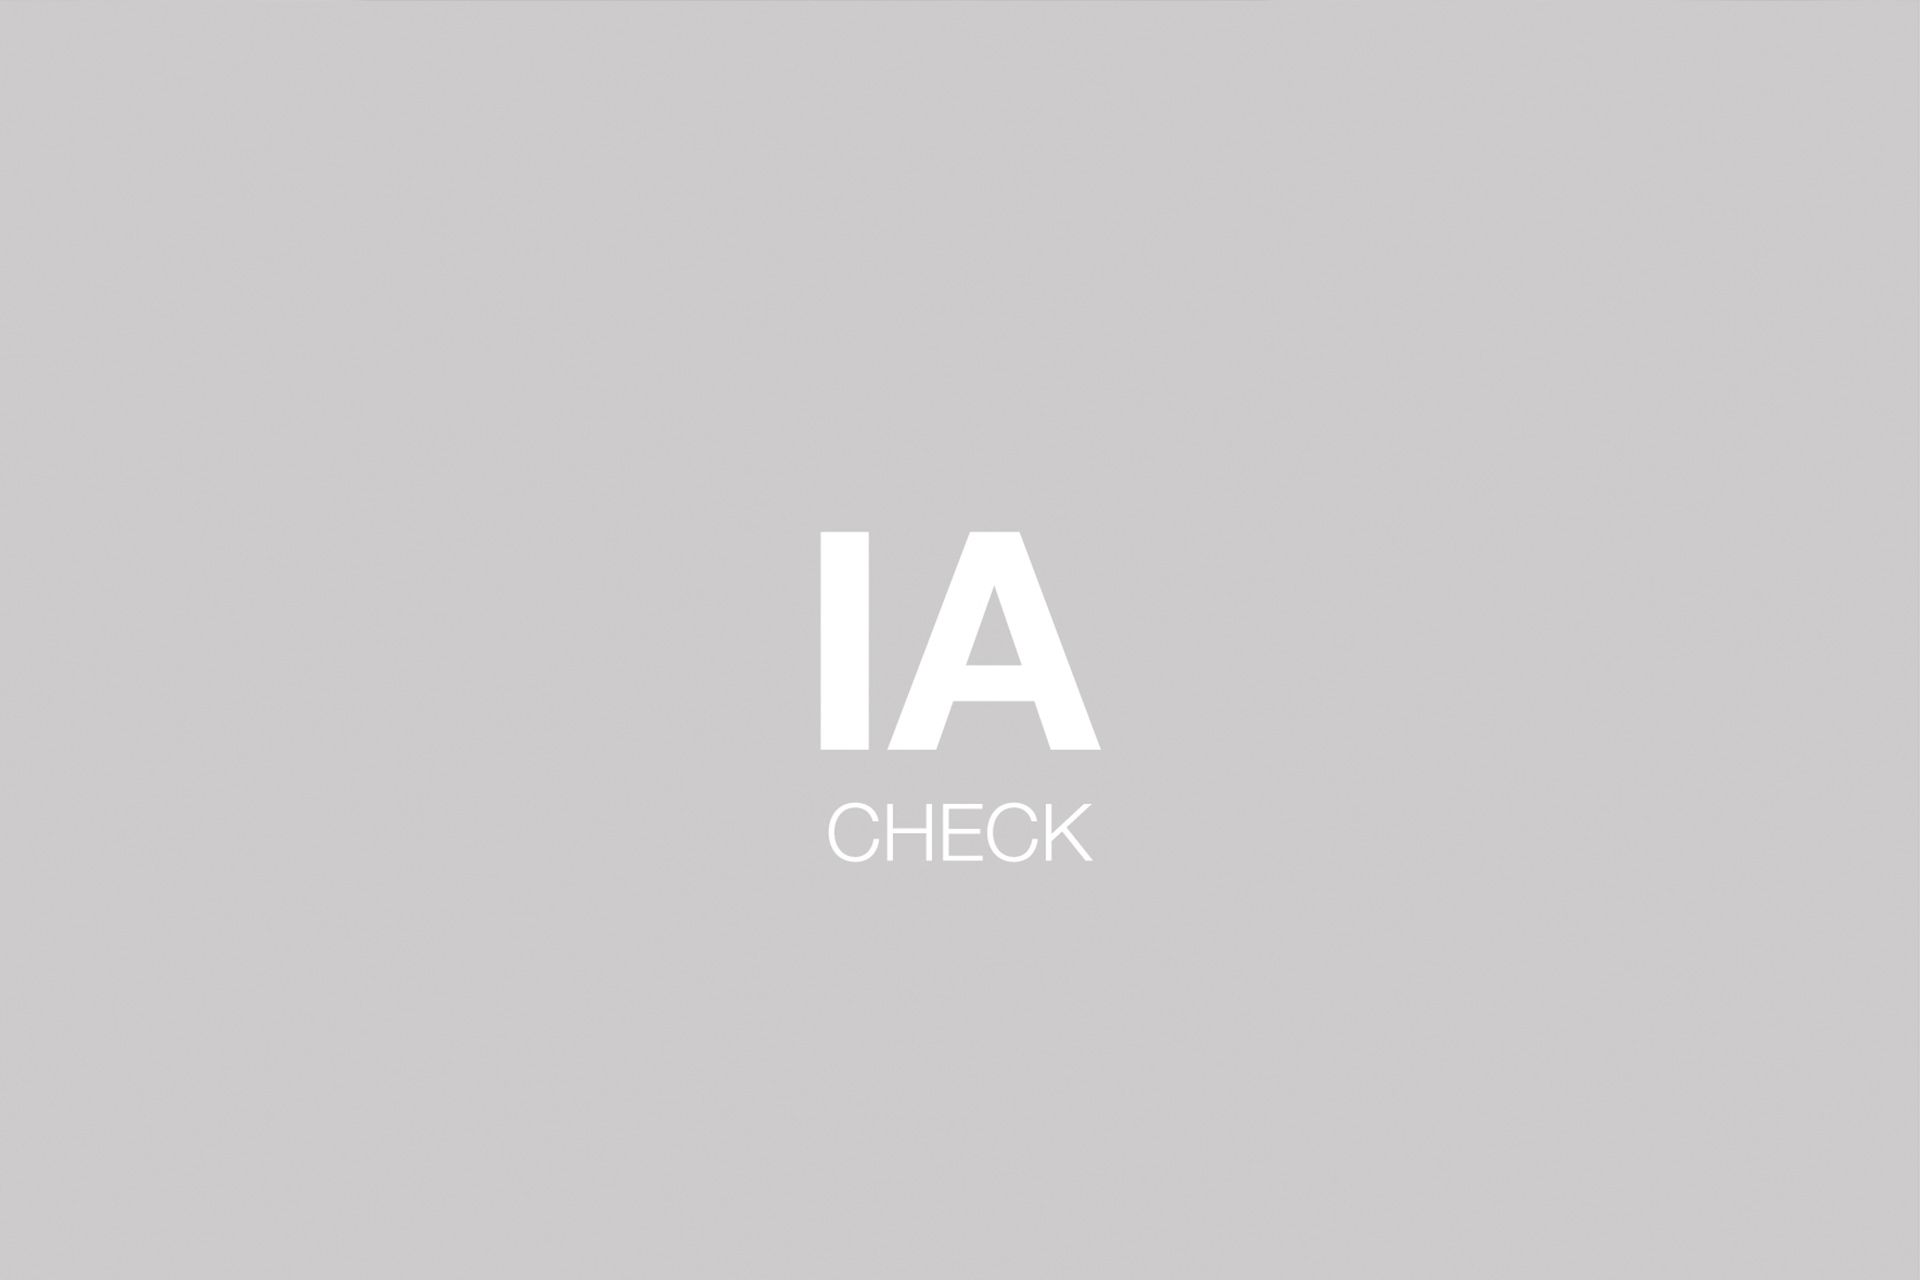 IA Check – Analyse cutanée par intelligence artificielle